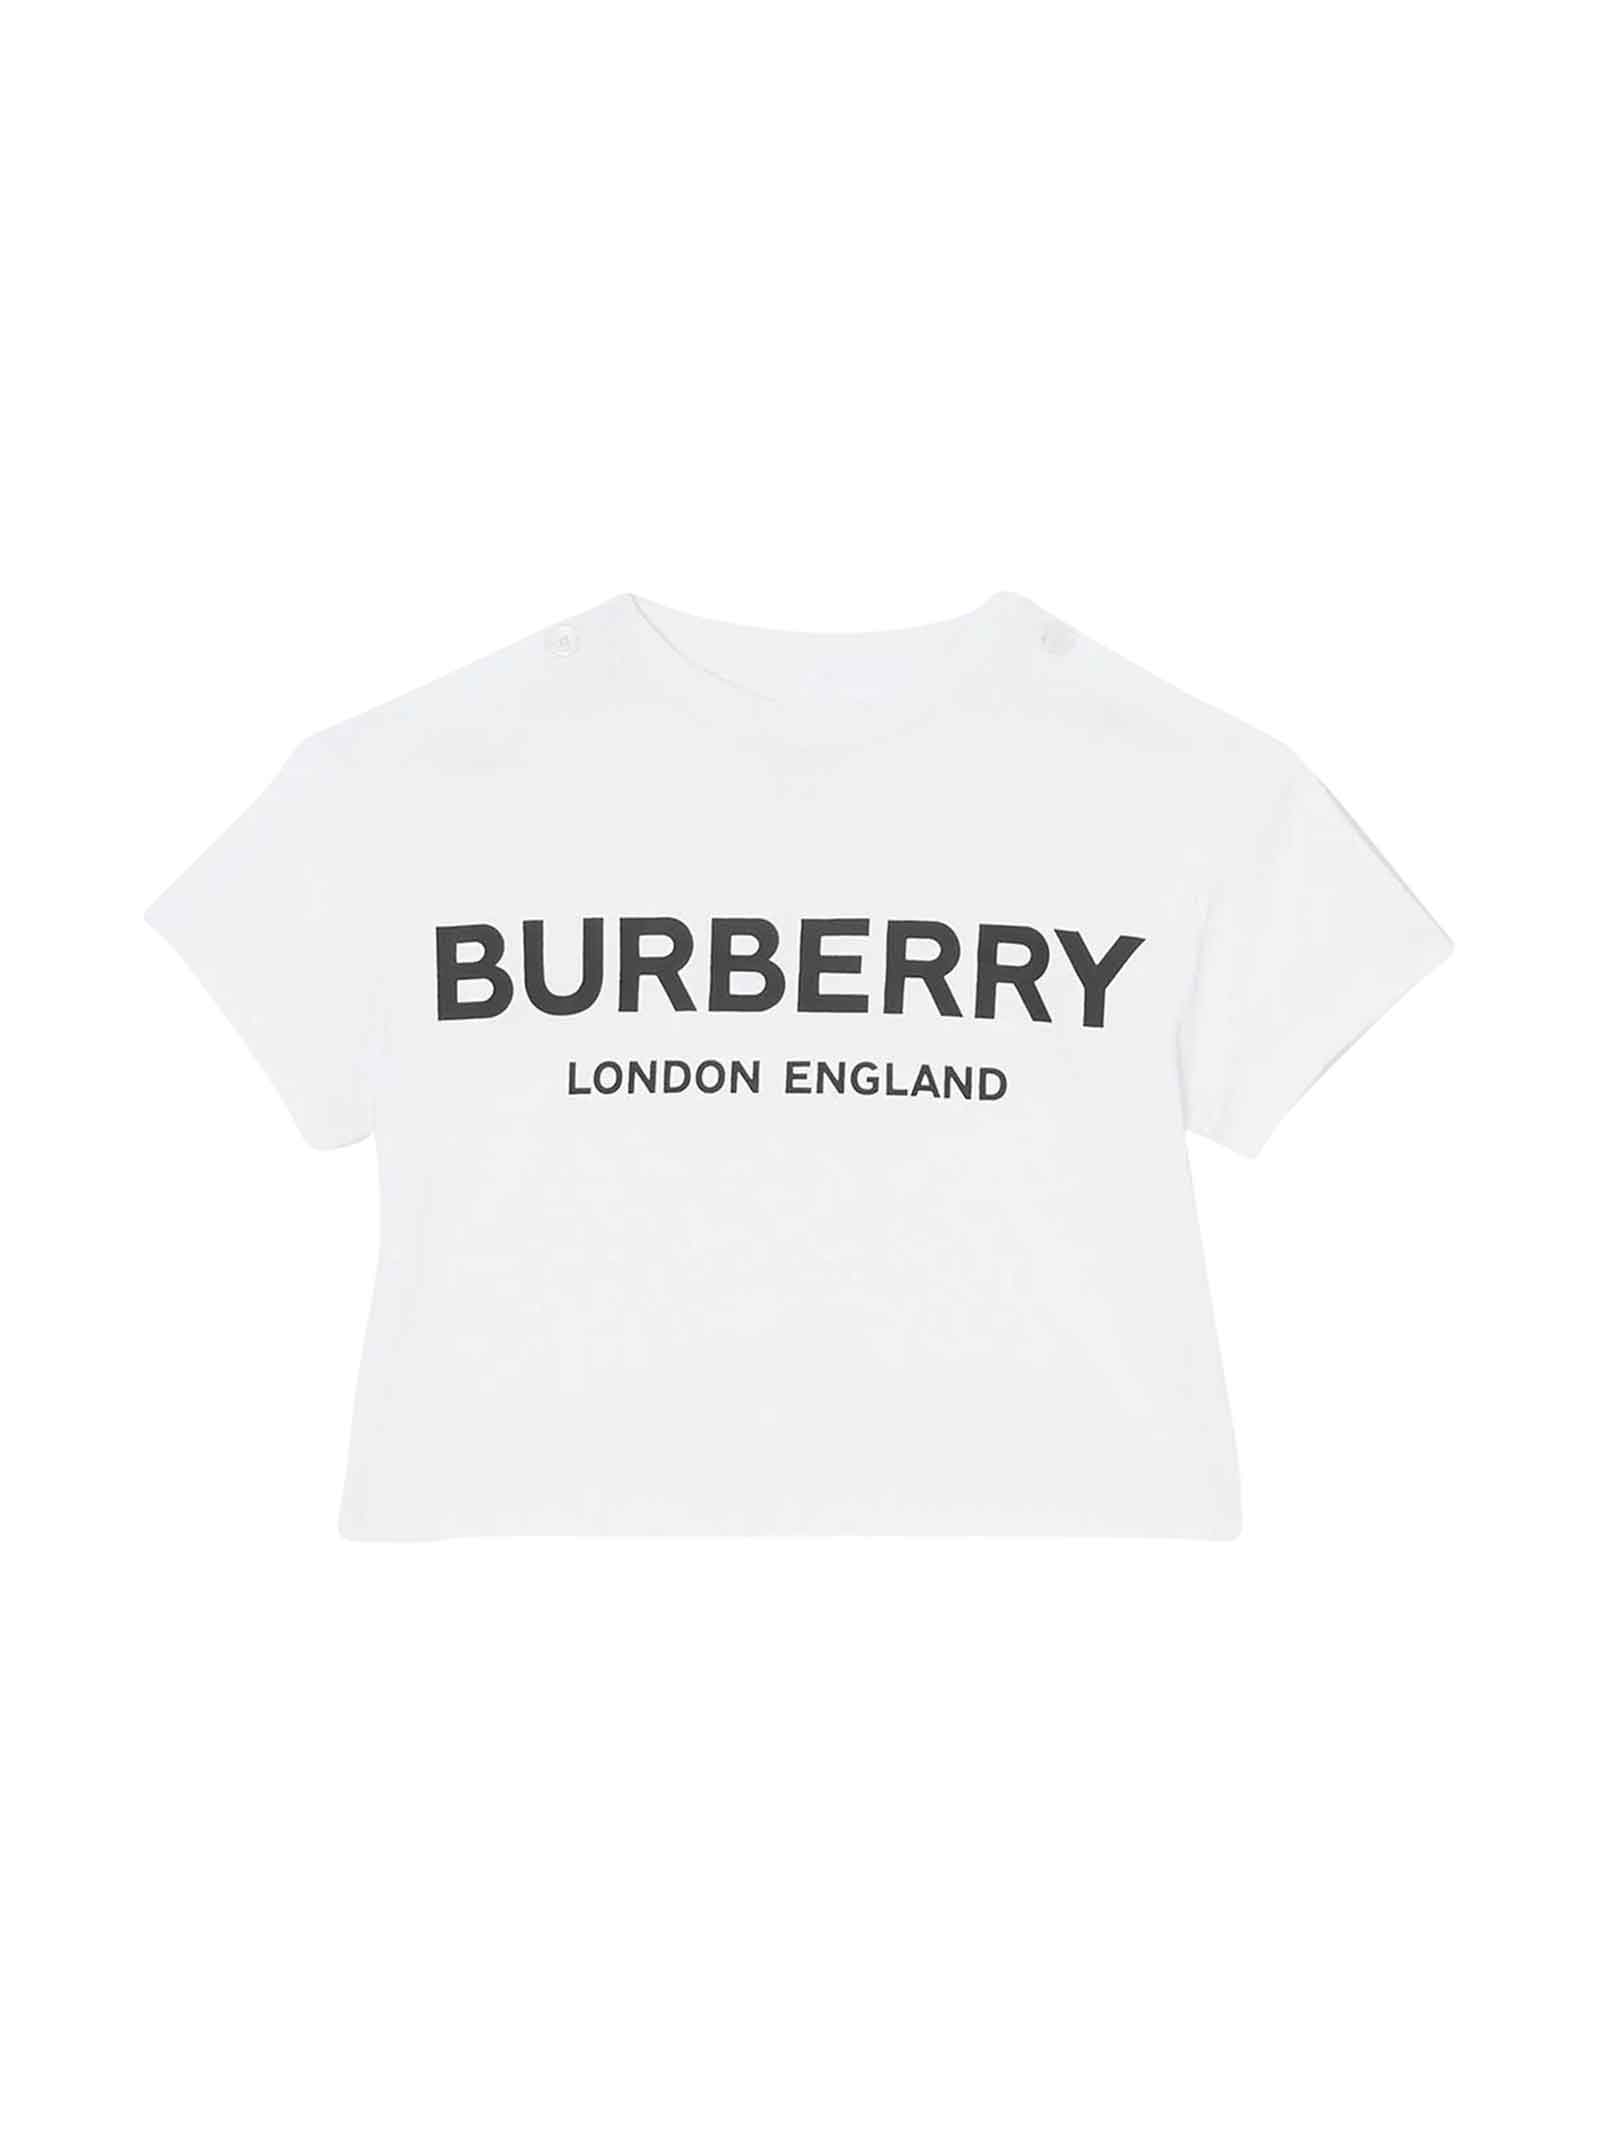 BURBERRY WHITE T-SHIRT,11282251